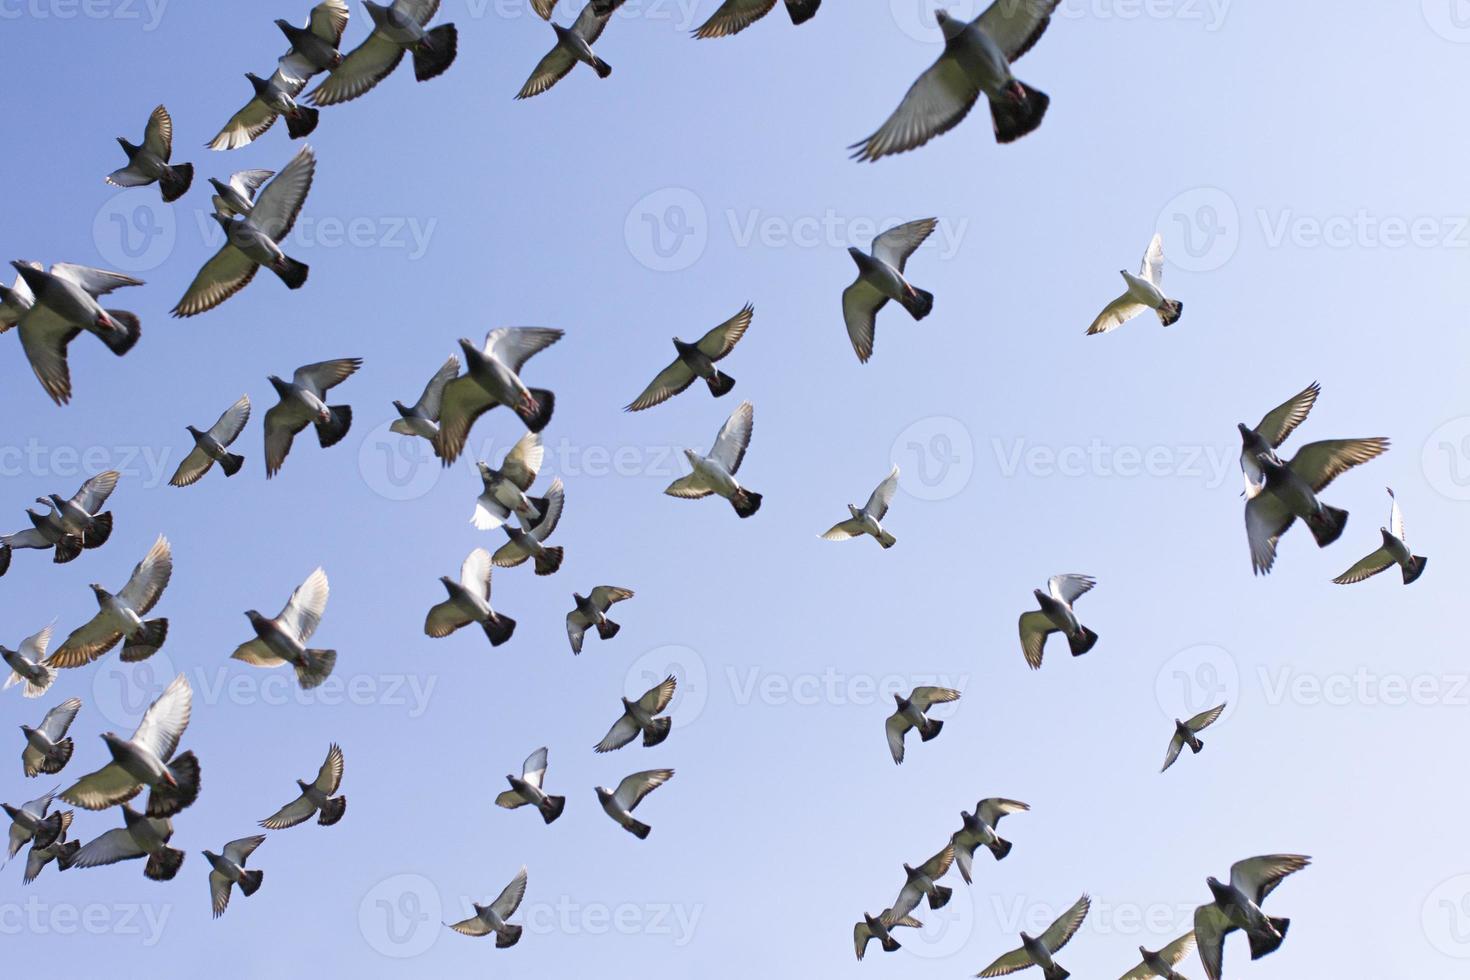 bando de pássaros de pombo de corrida voando contra o céu azul claro foto